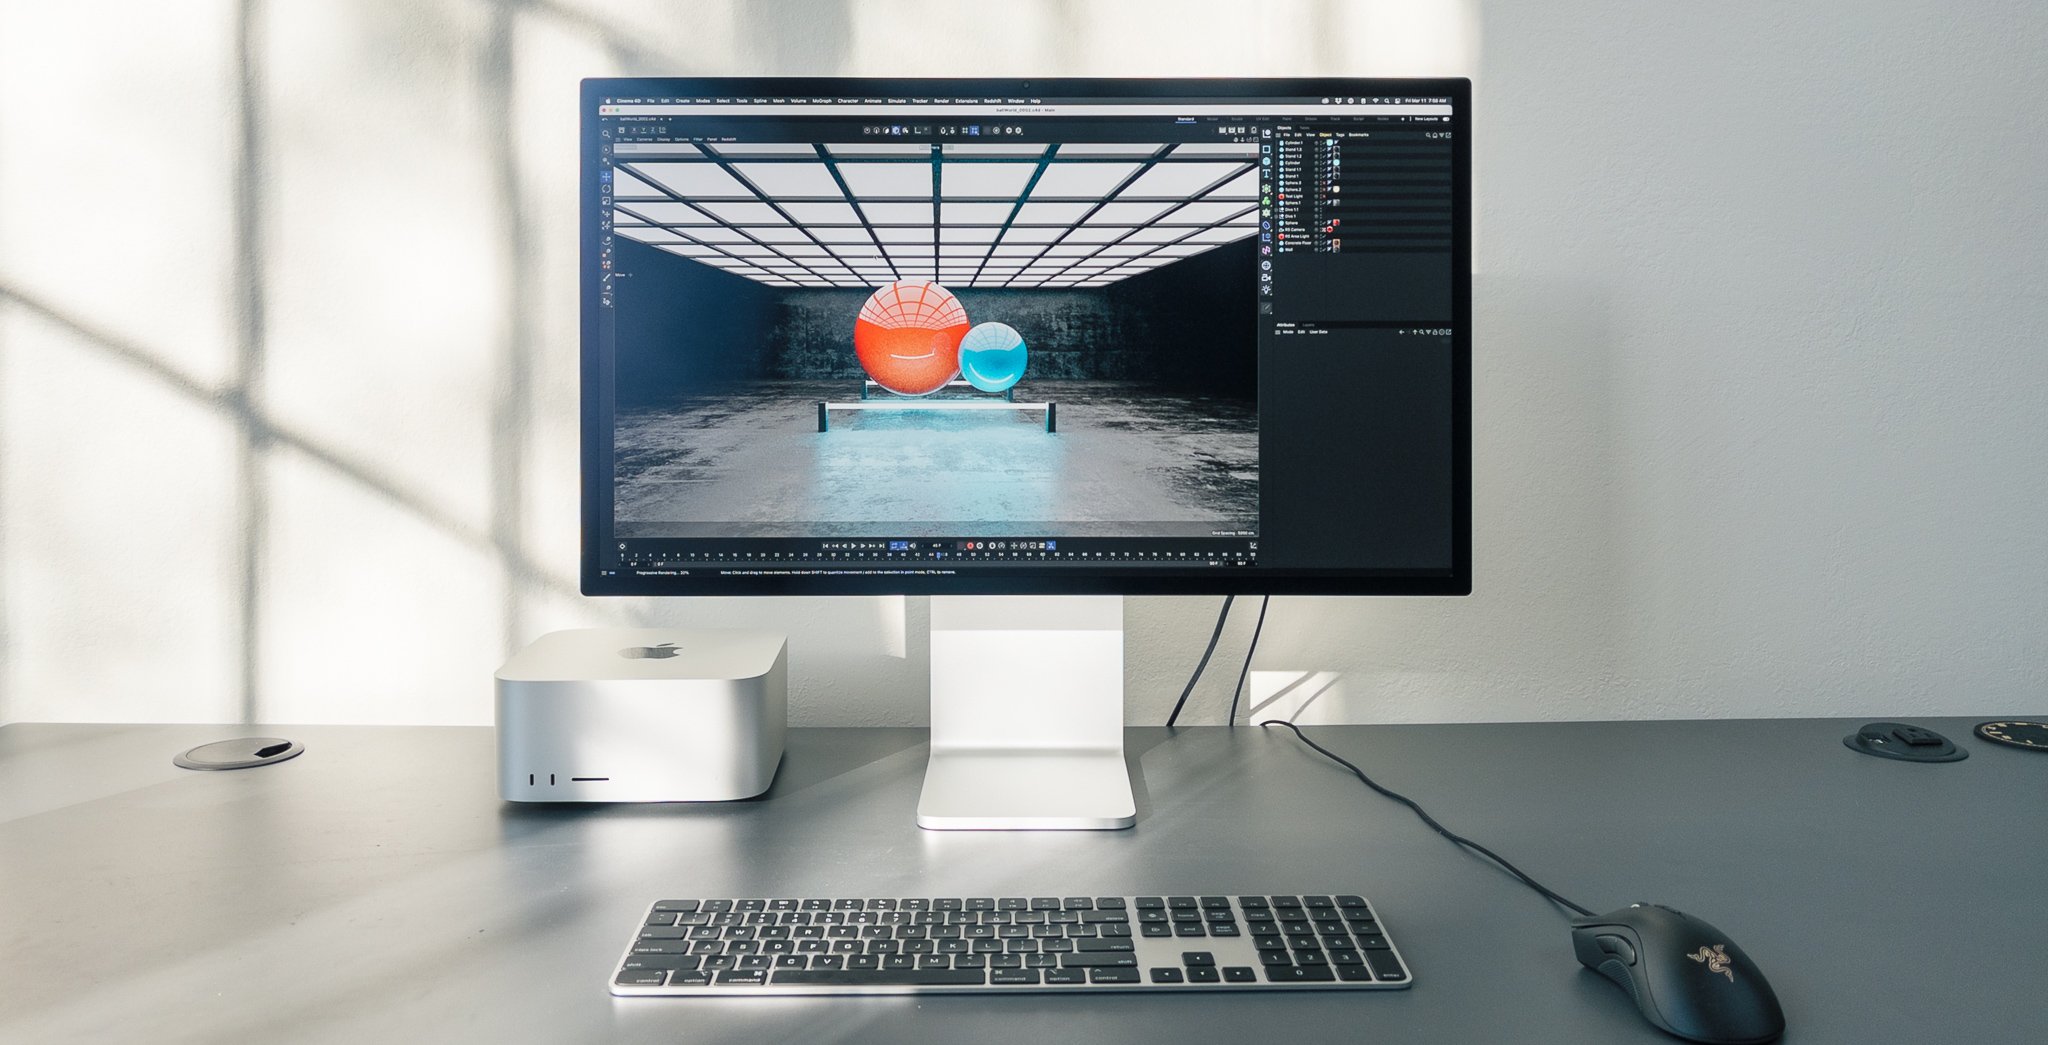 Mac Studio: Release date, price, specs and design